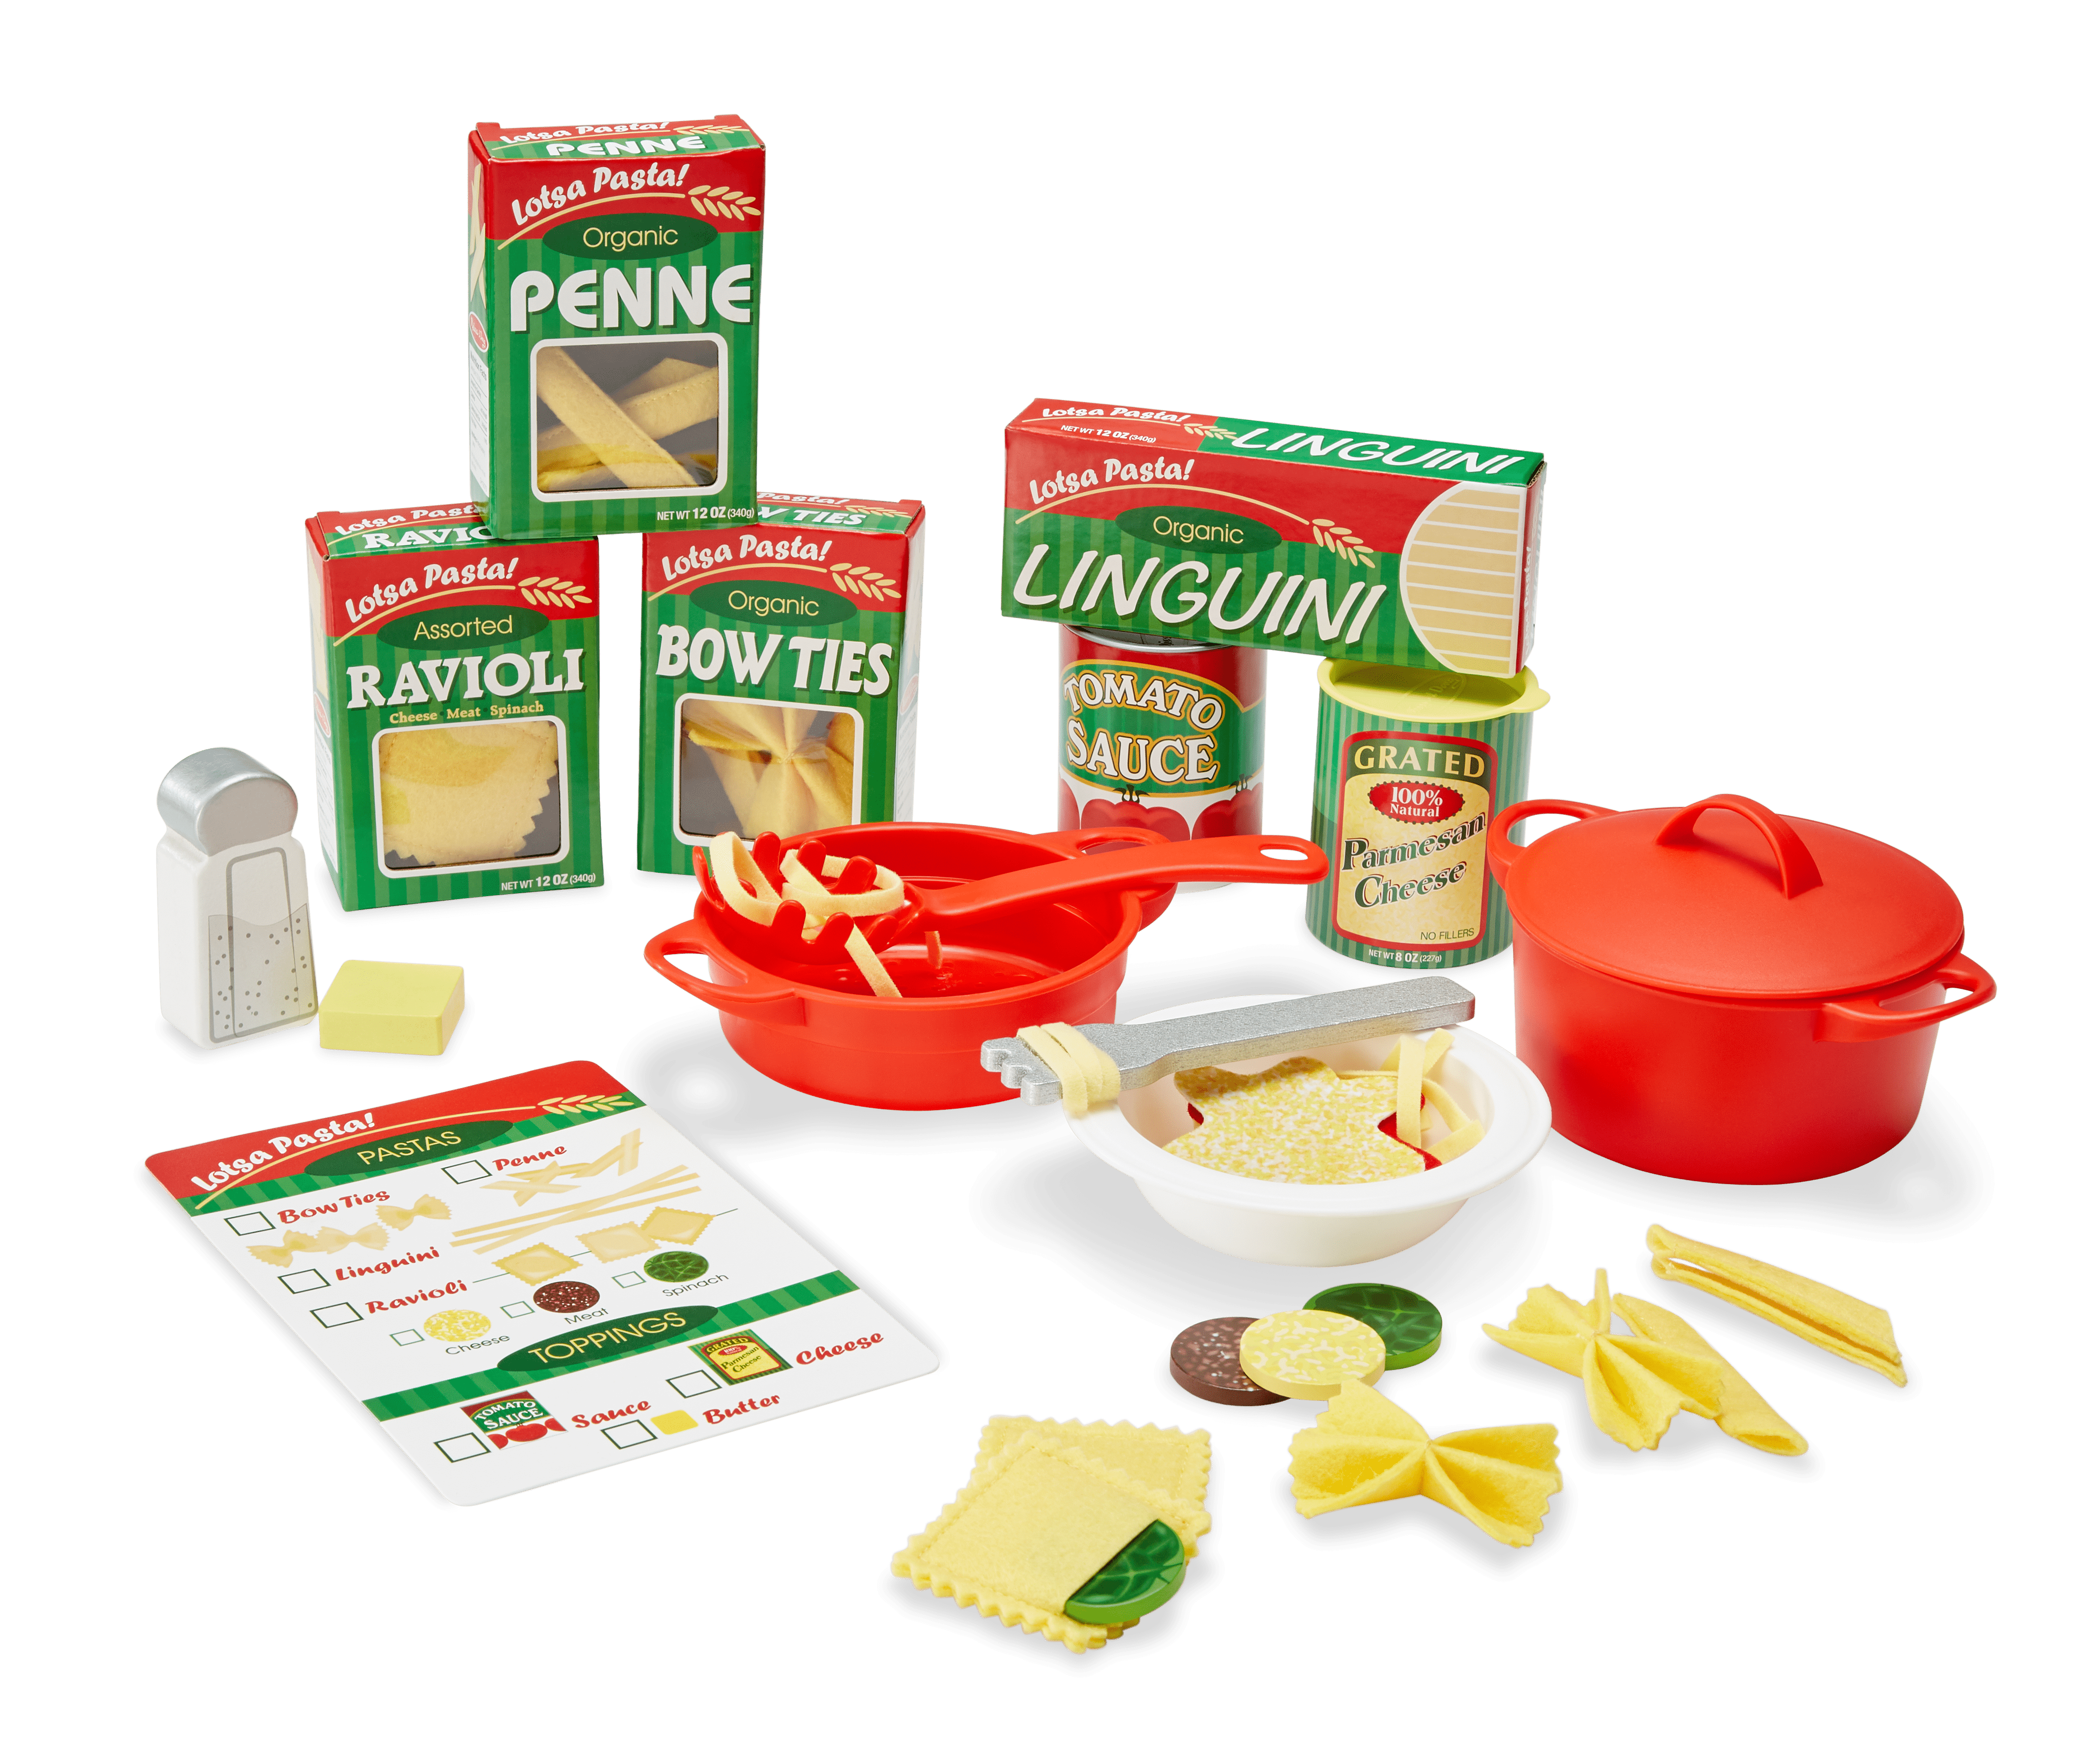 melissa and doug perfect pasta set